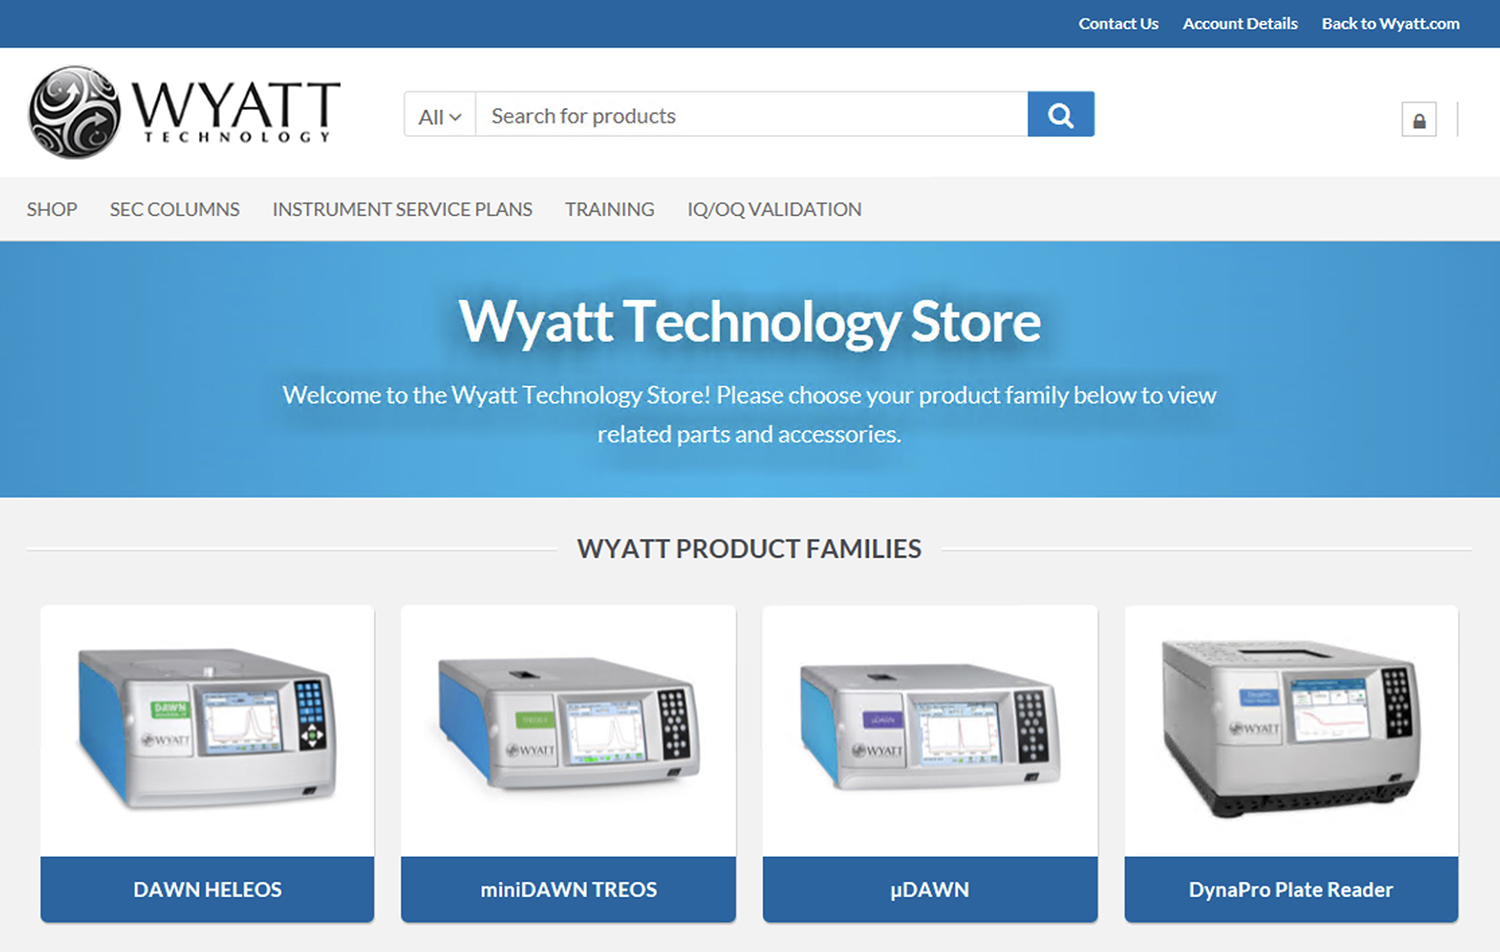 Introducing the Wyatt Technology Store